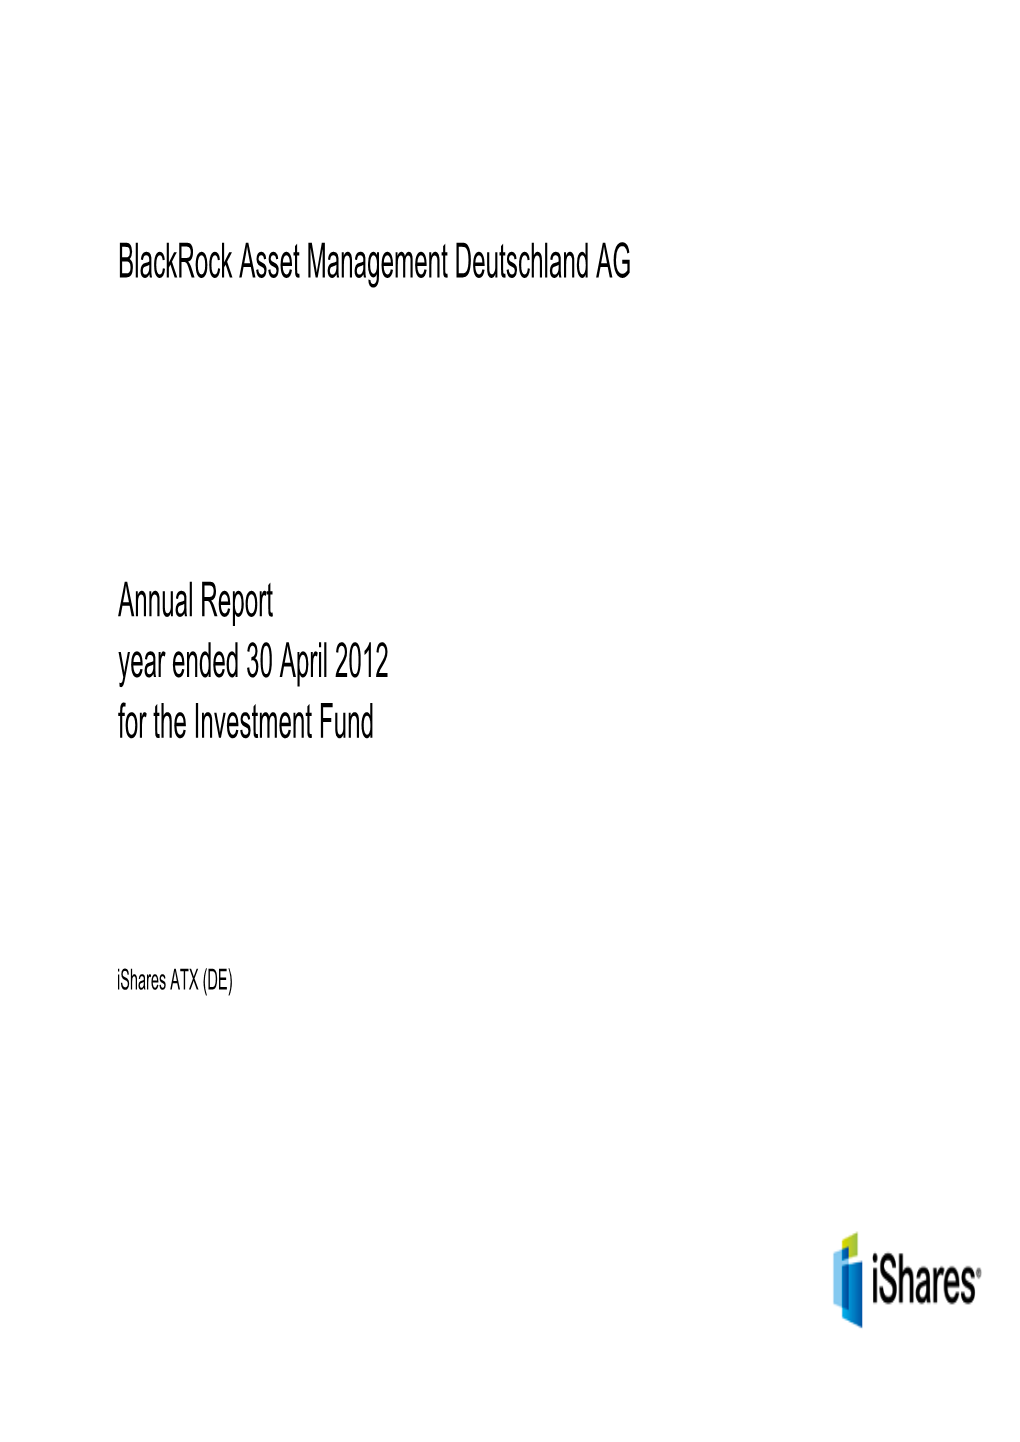 Blackrock Asset Management Deutschland AG Annual Report